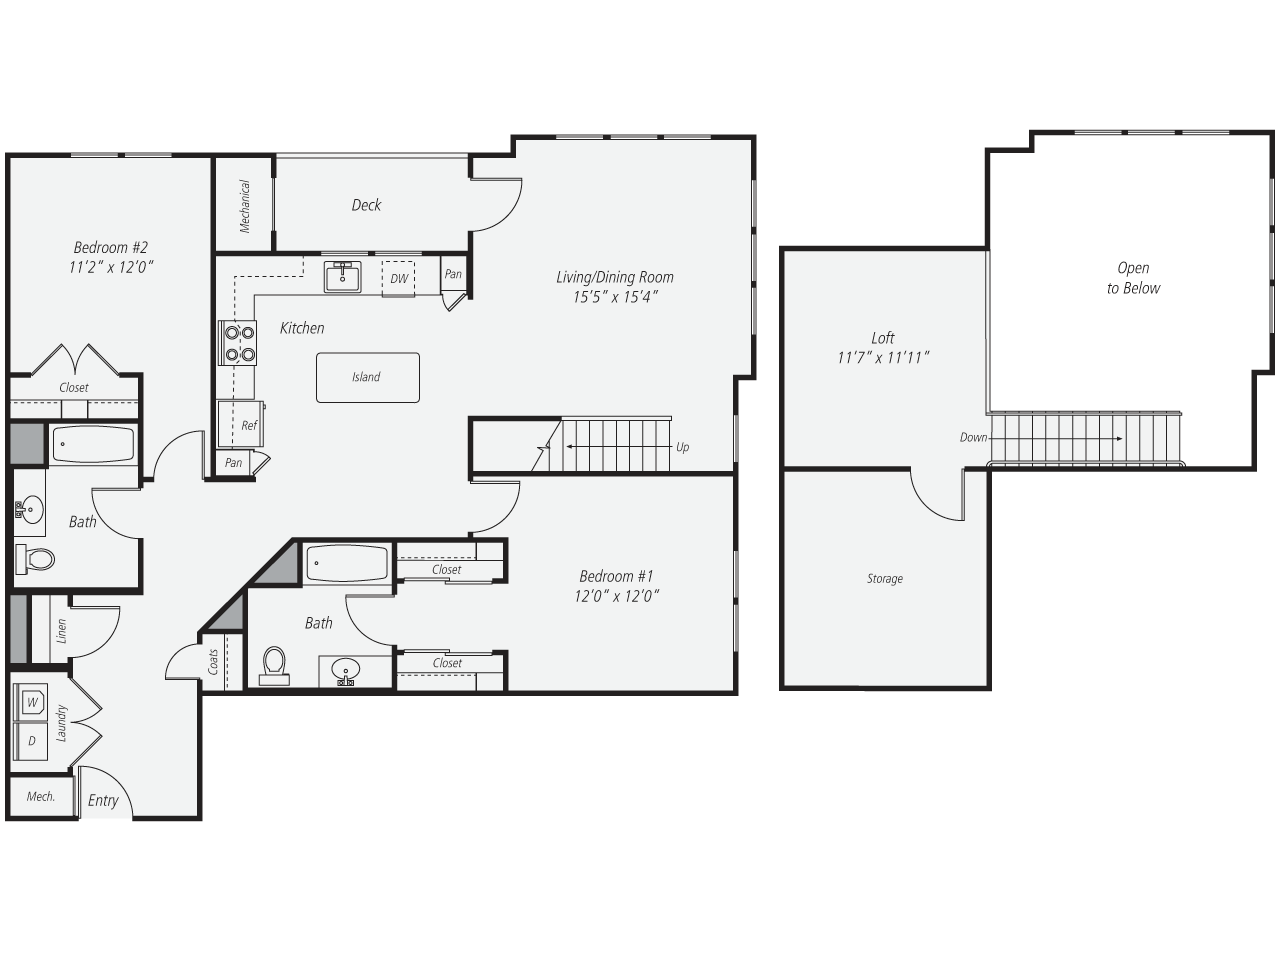 Floorplan for Apartment #403, 2 bedroom unit at Halstead Norwalk